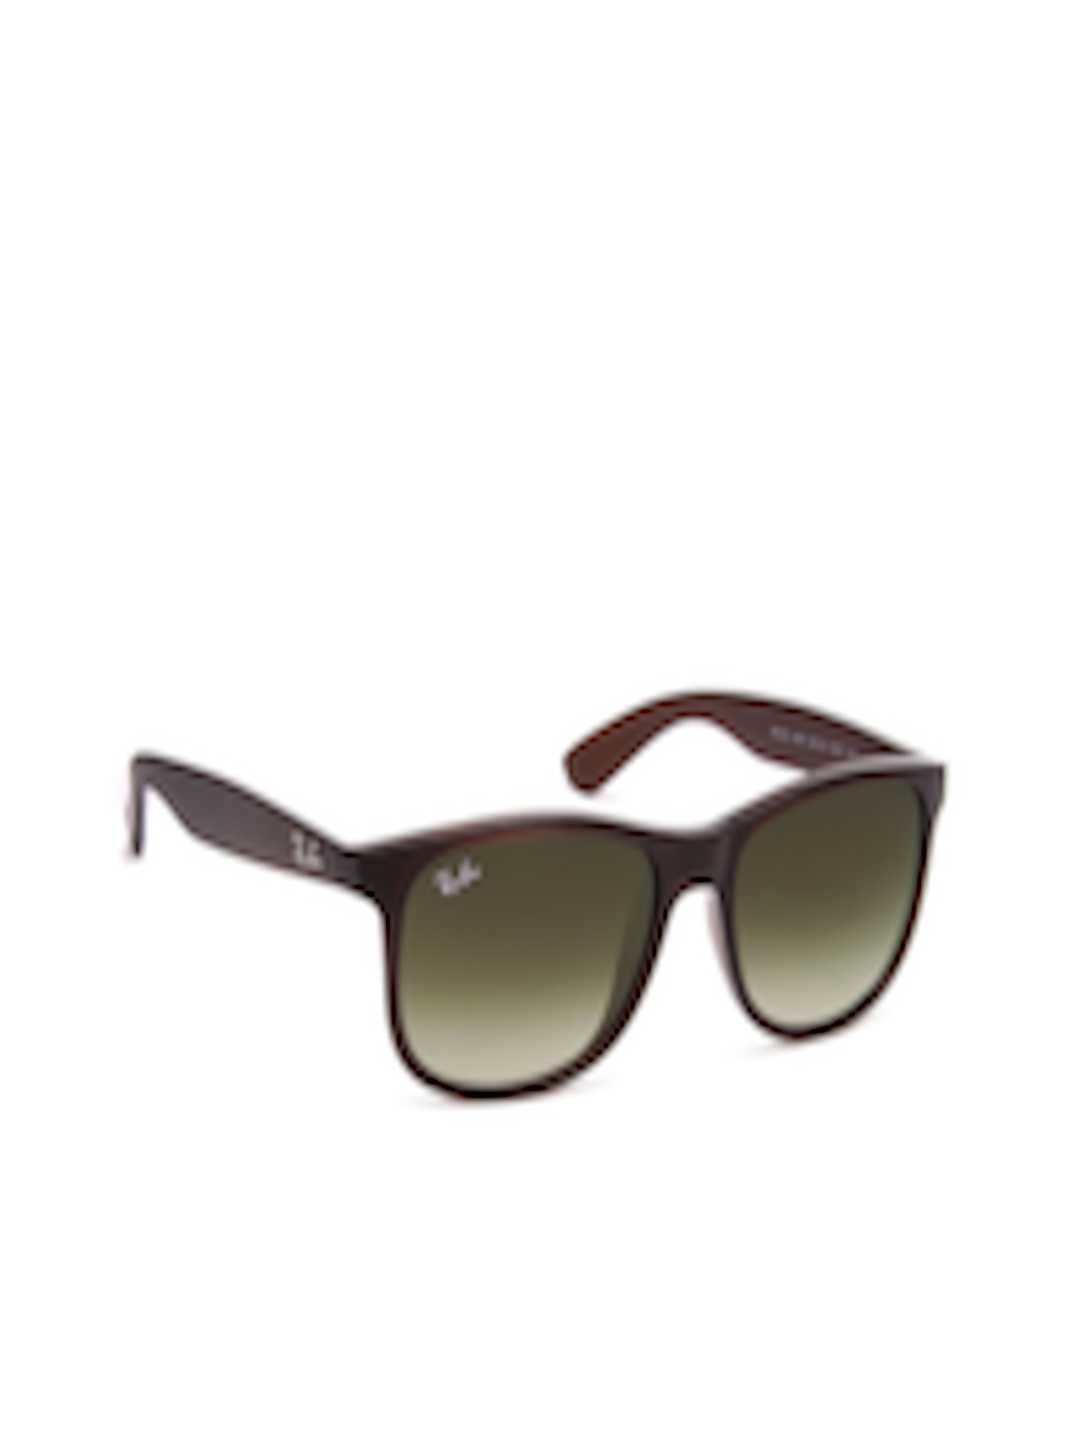 Buy Ray Ban Unisex Sunglasses 0RB4202 - Sunglasses for Unisex 255647